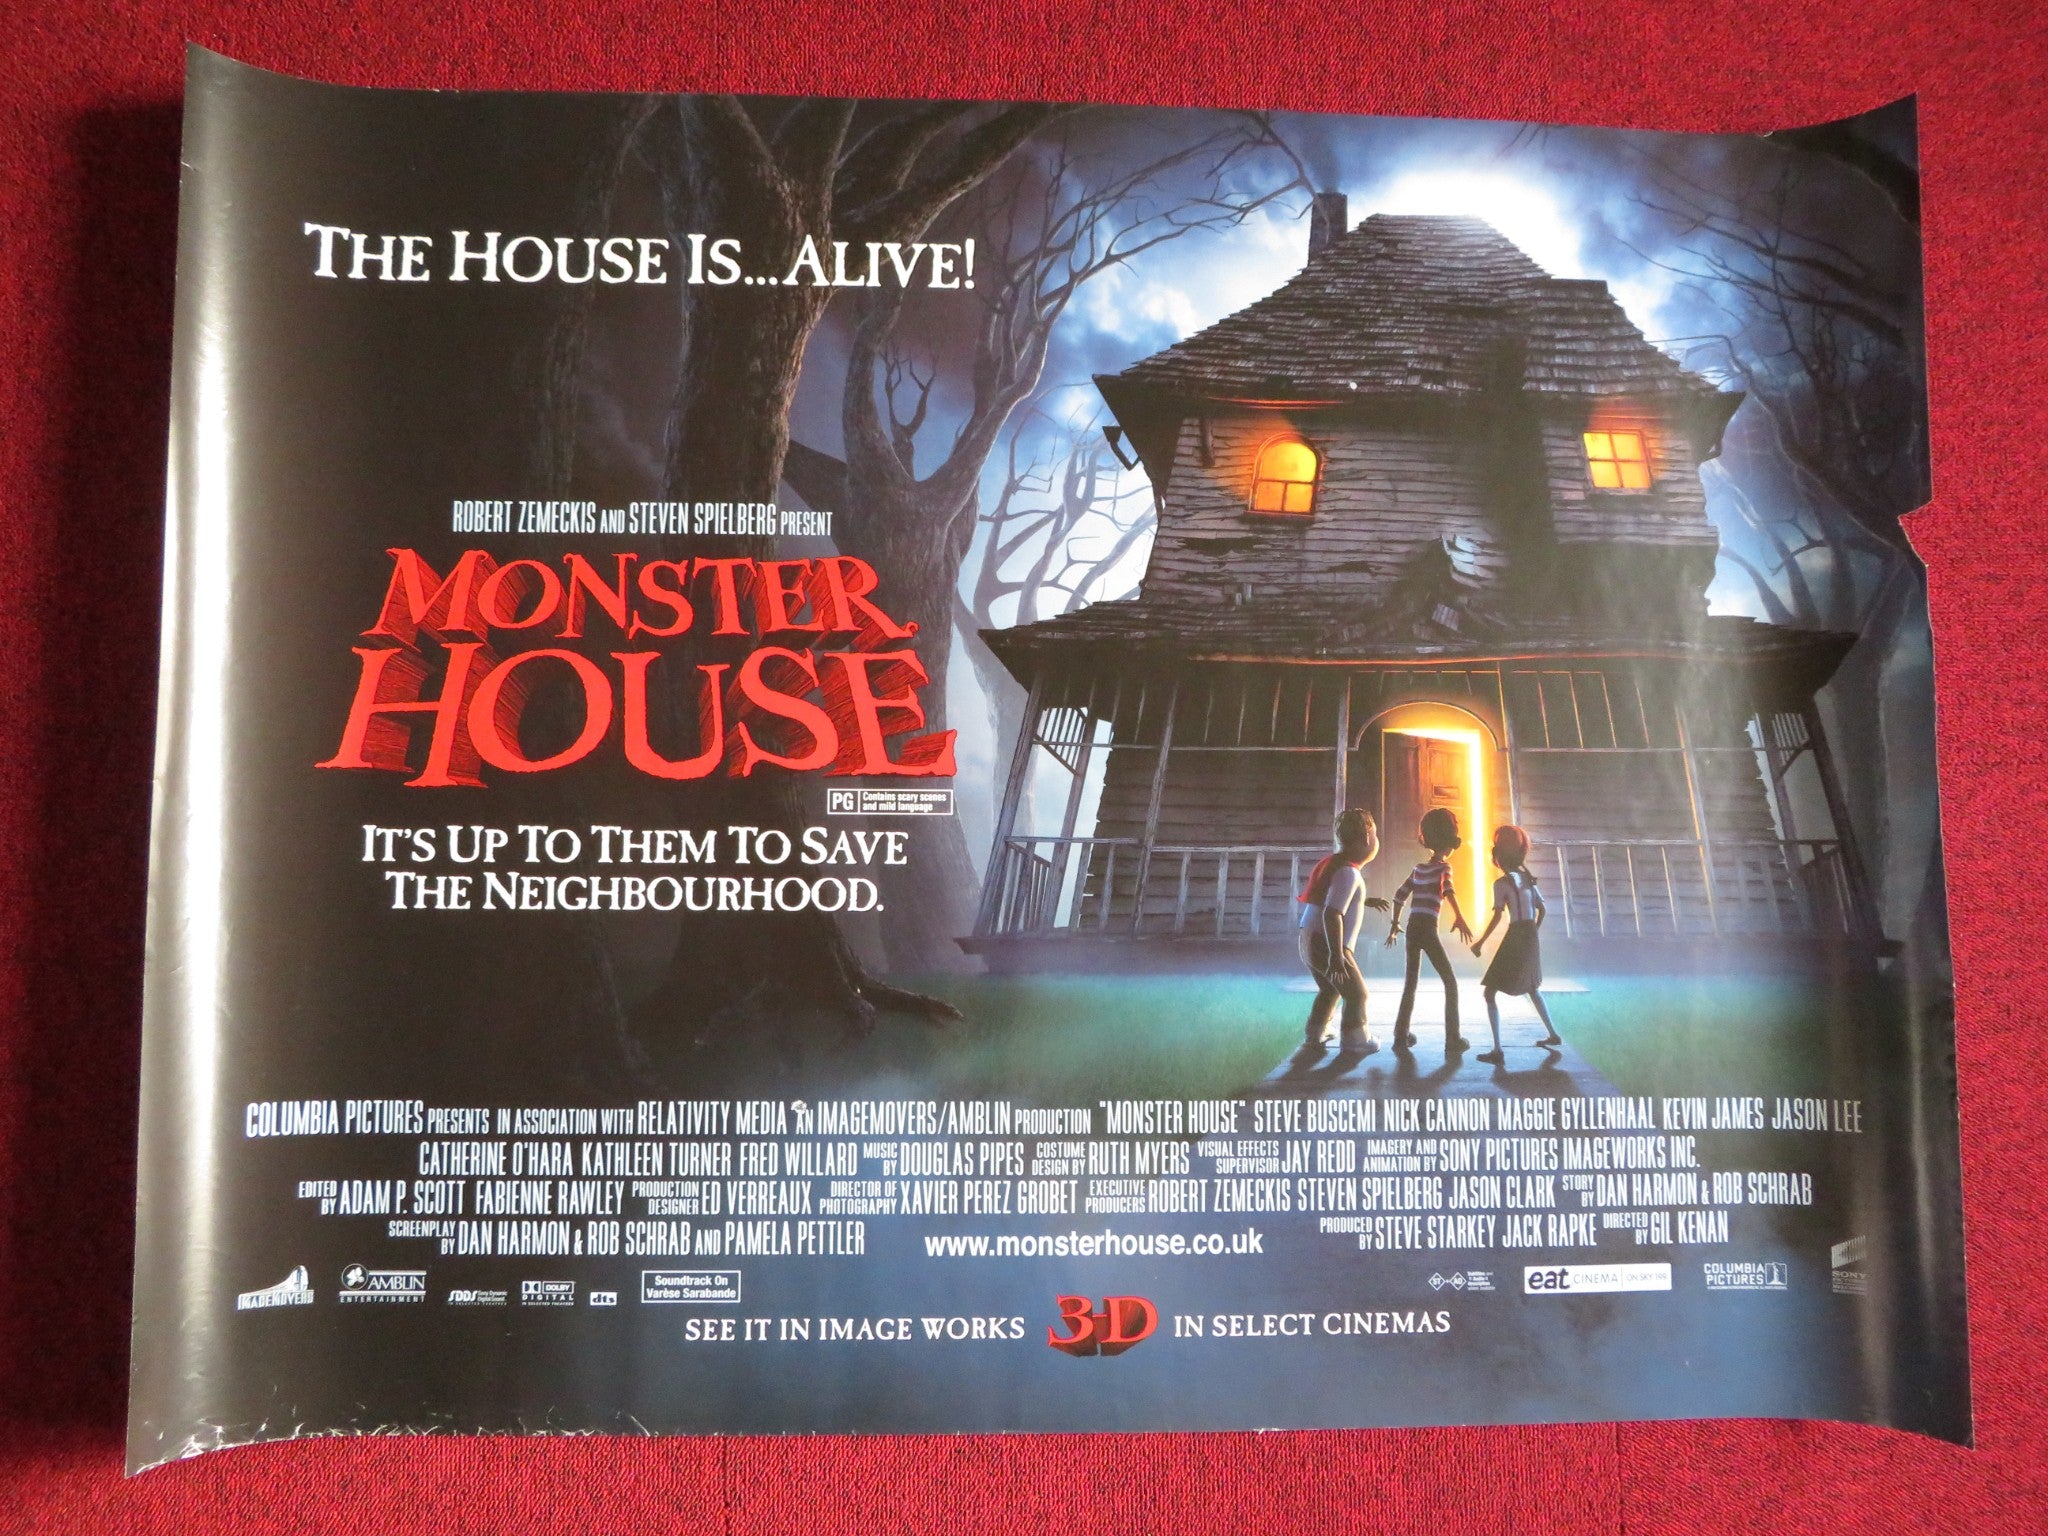 Monsters, Inc. Movie Poster 2001 British Quad (30x40)